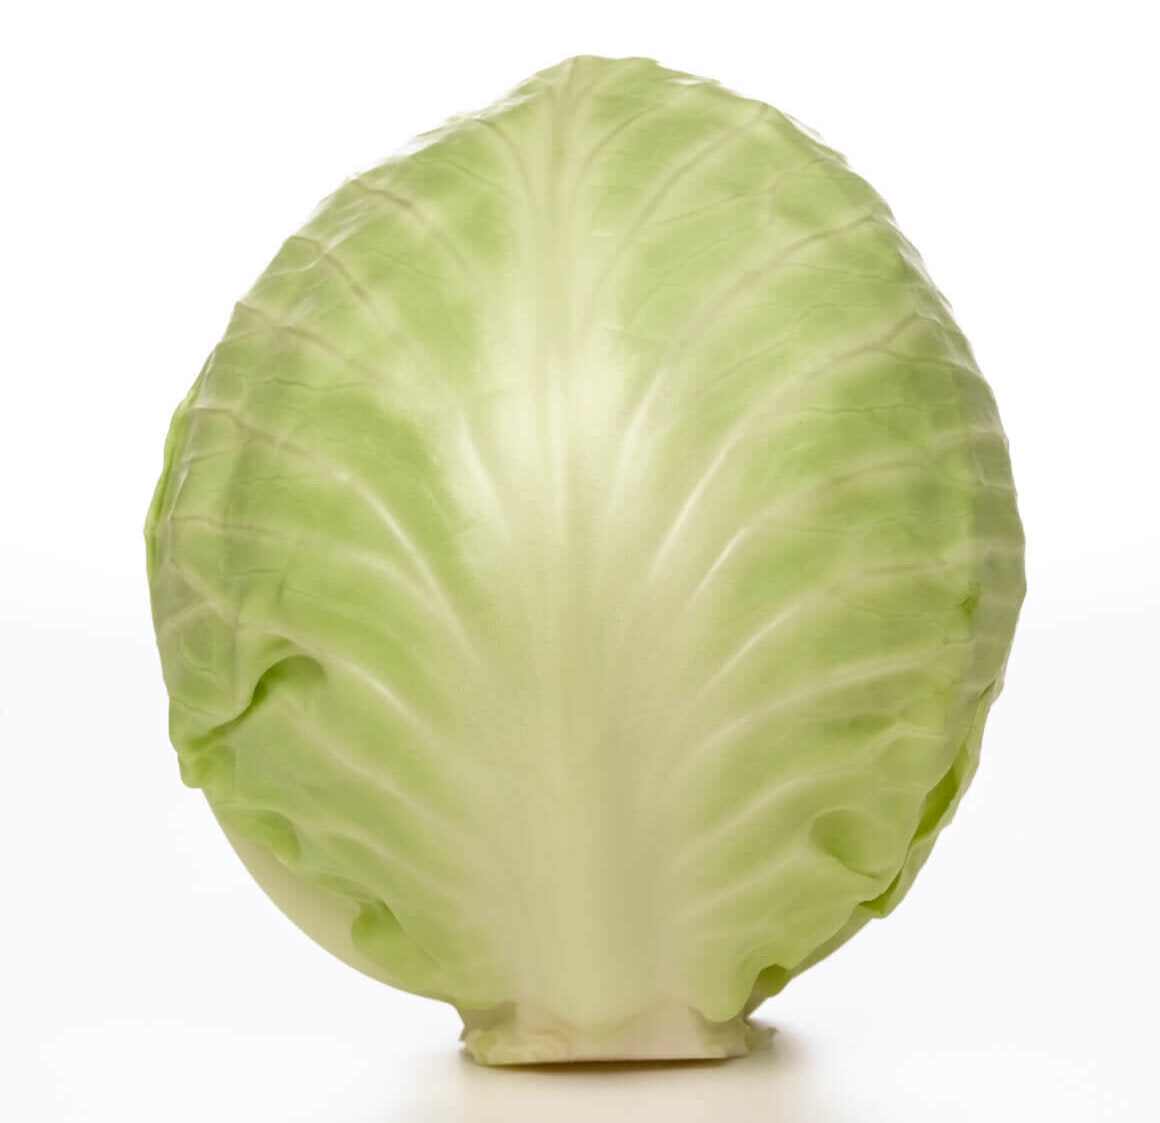 Cabbage Copenhagen Market - Ontario Seed Company